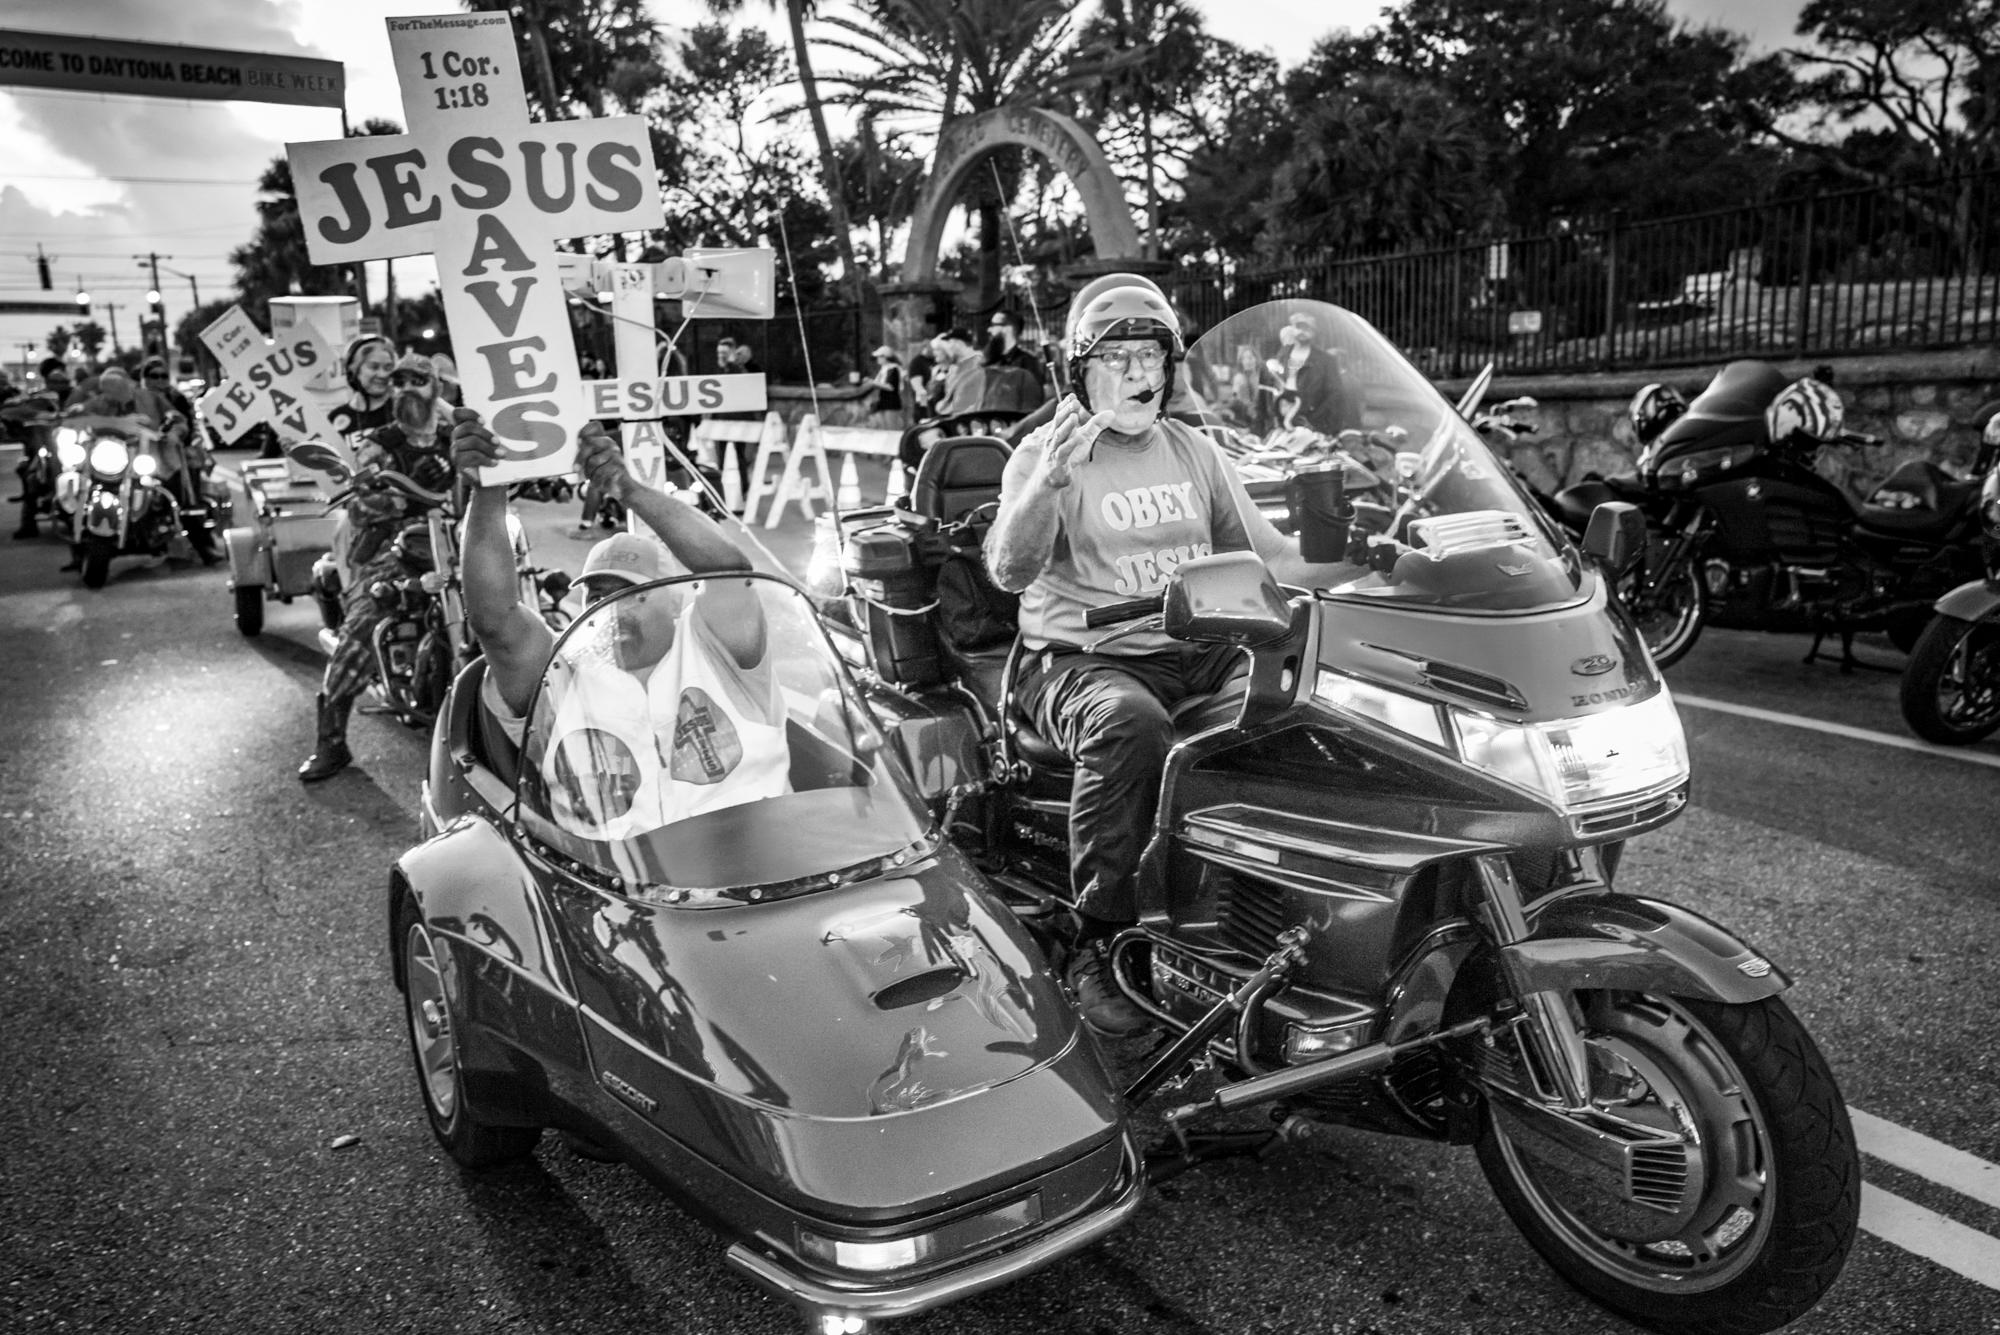 The American Biker - Religious procession, Main Street, Daytona Beach, FL, 2022